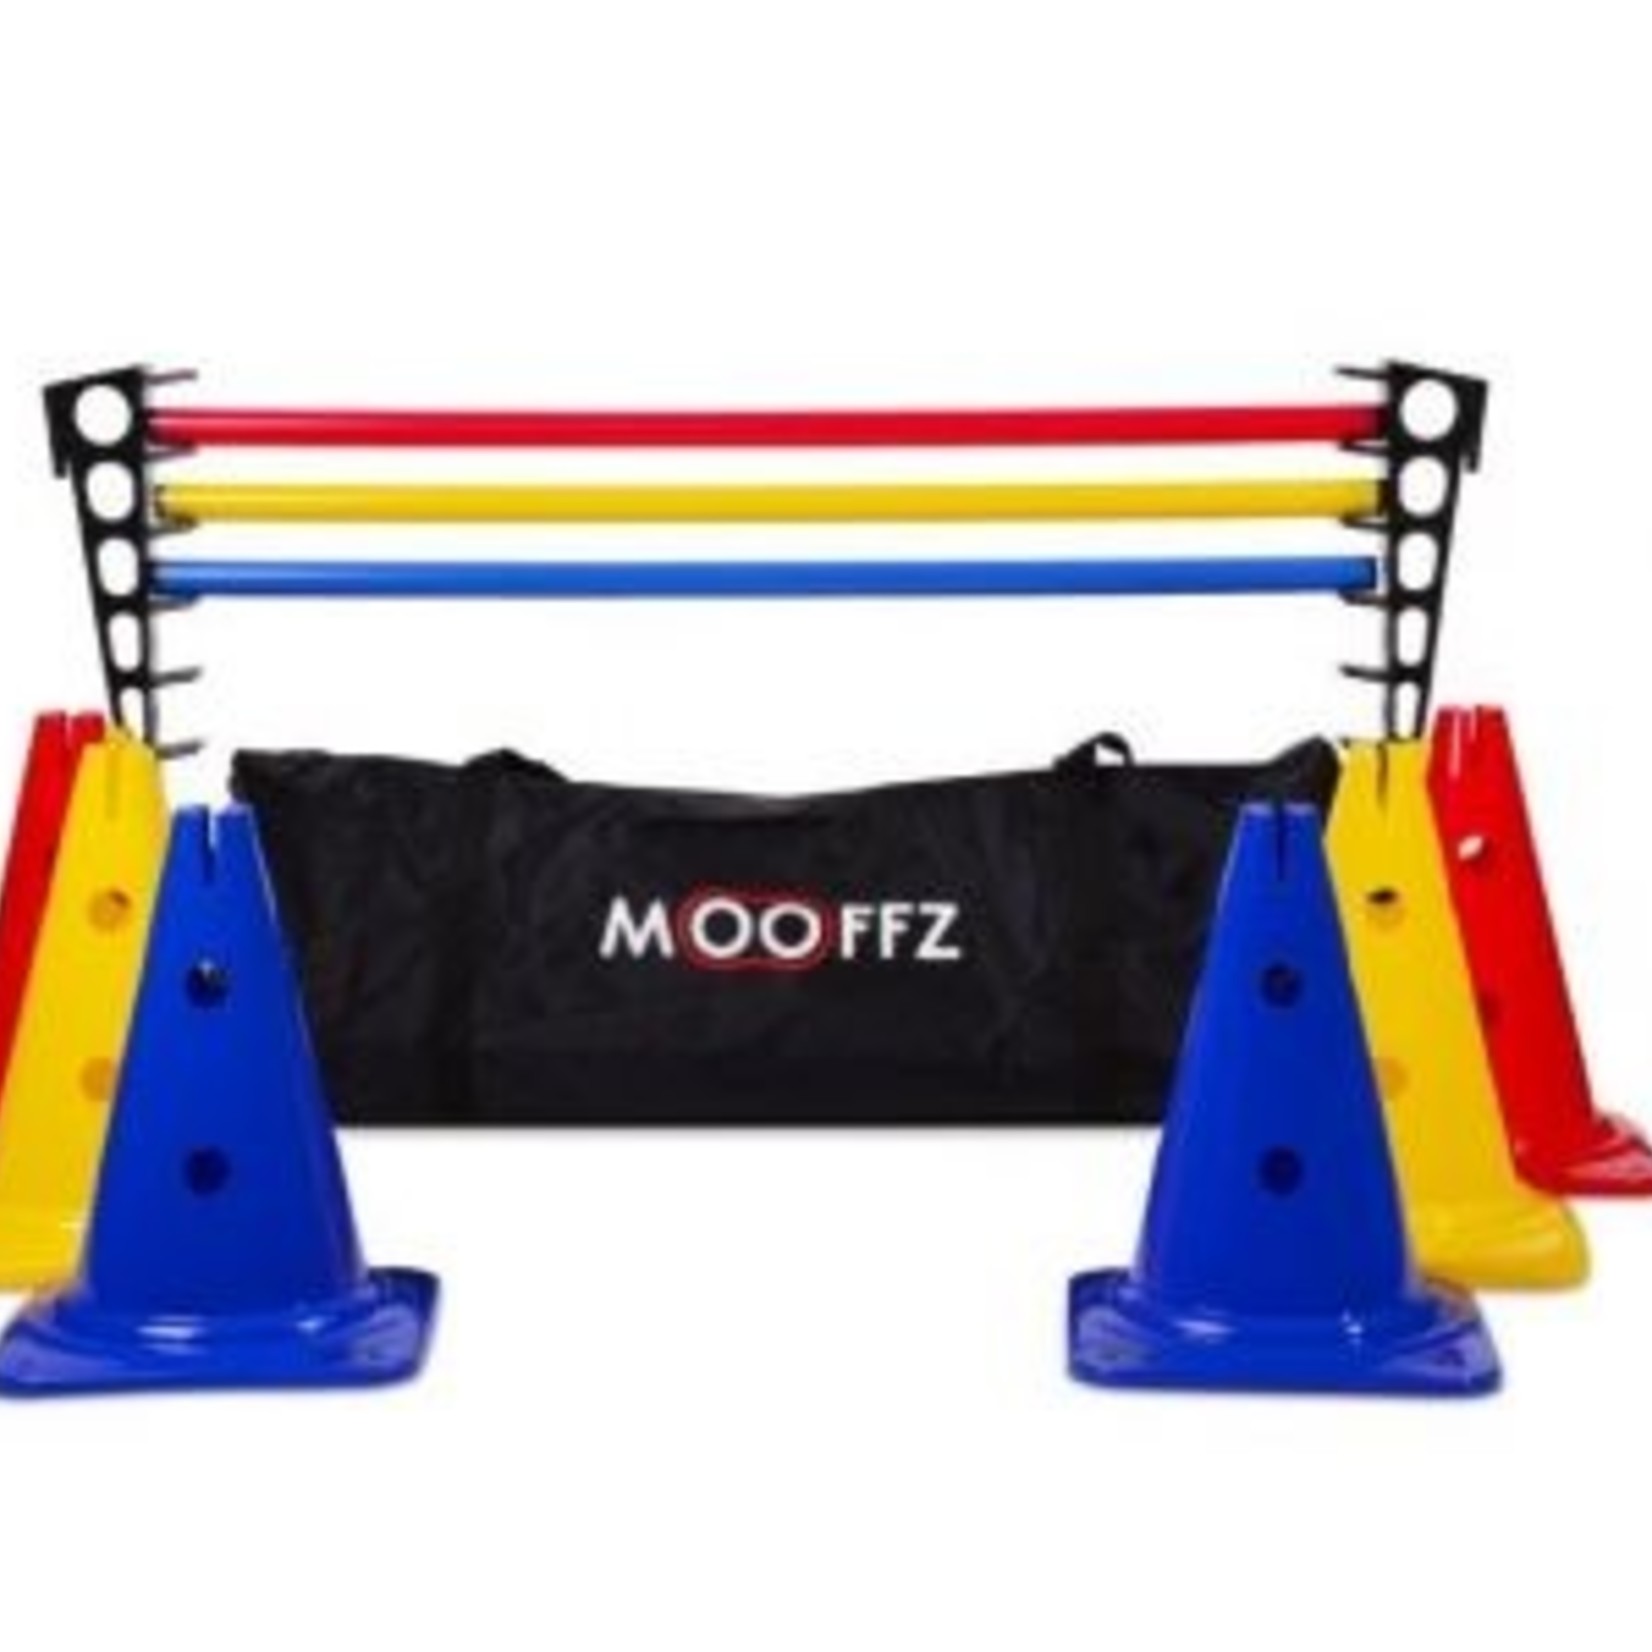 MOOFFZ Jump & Fun set